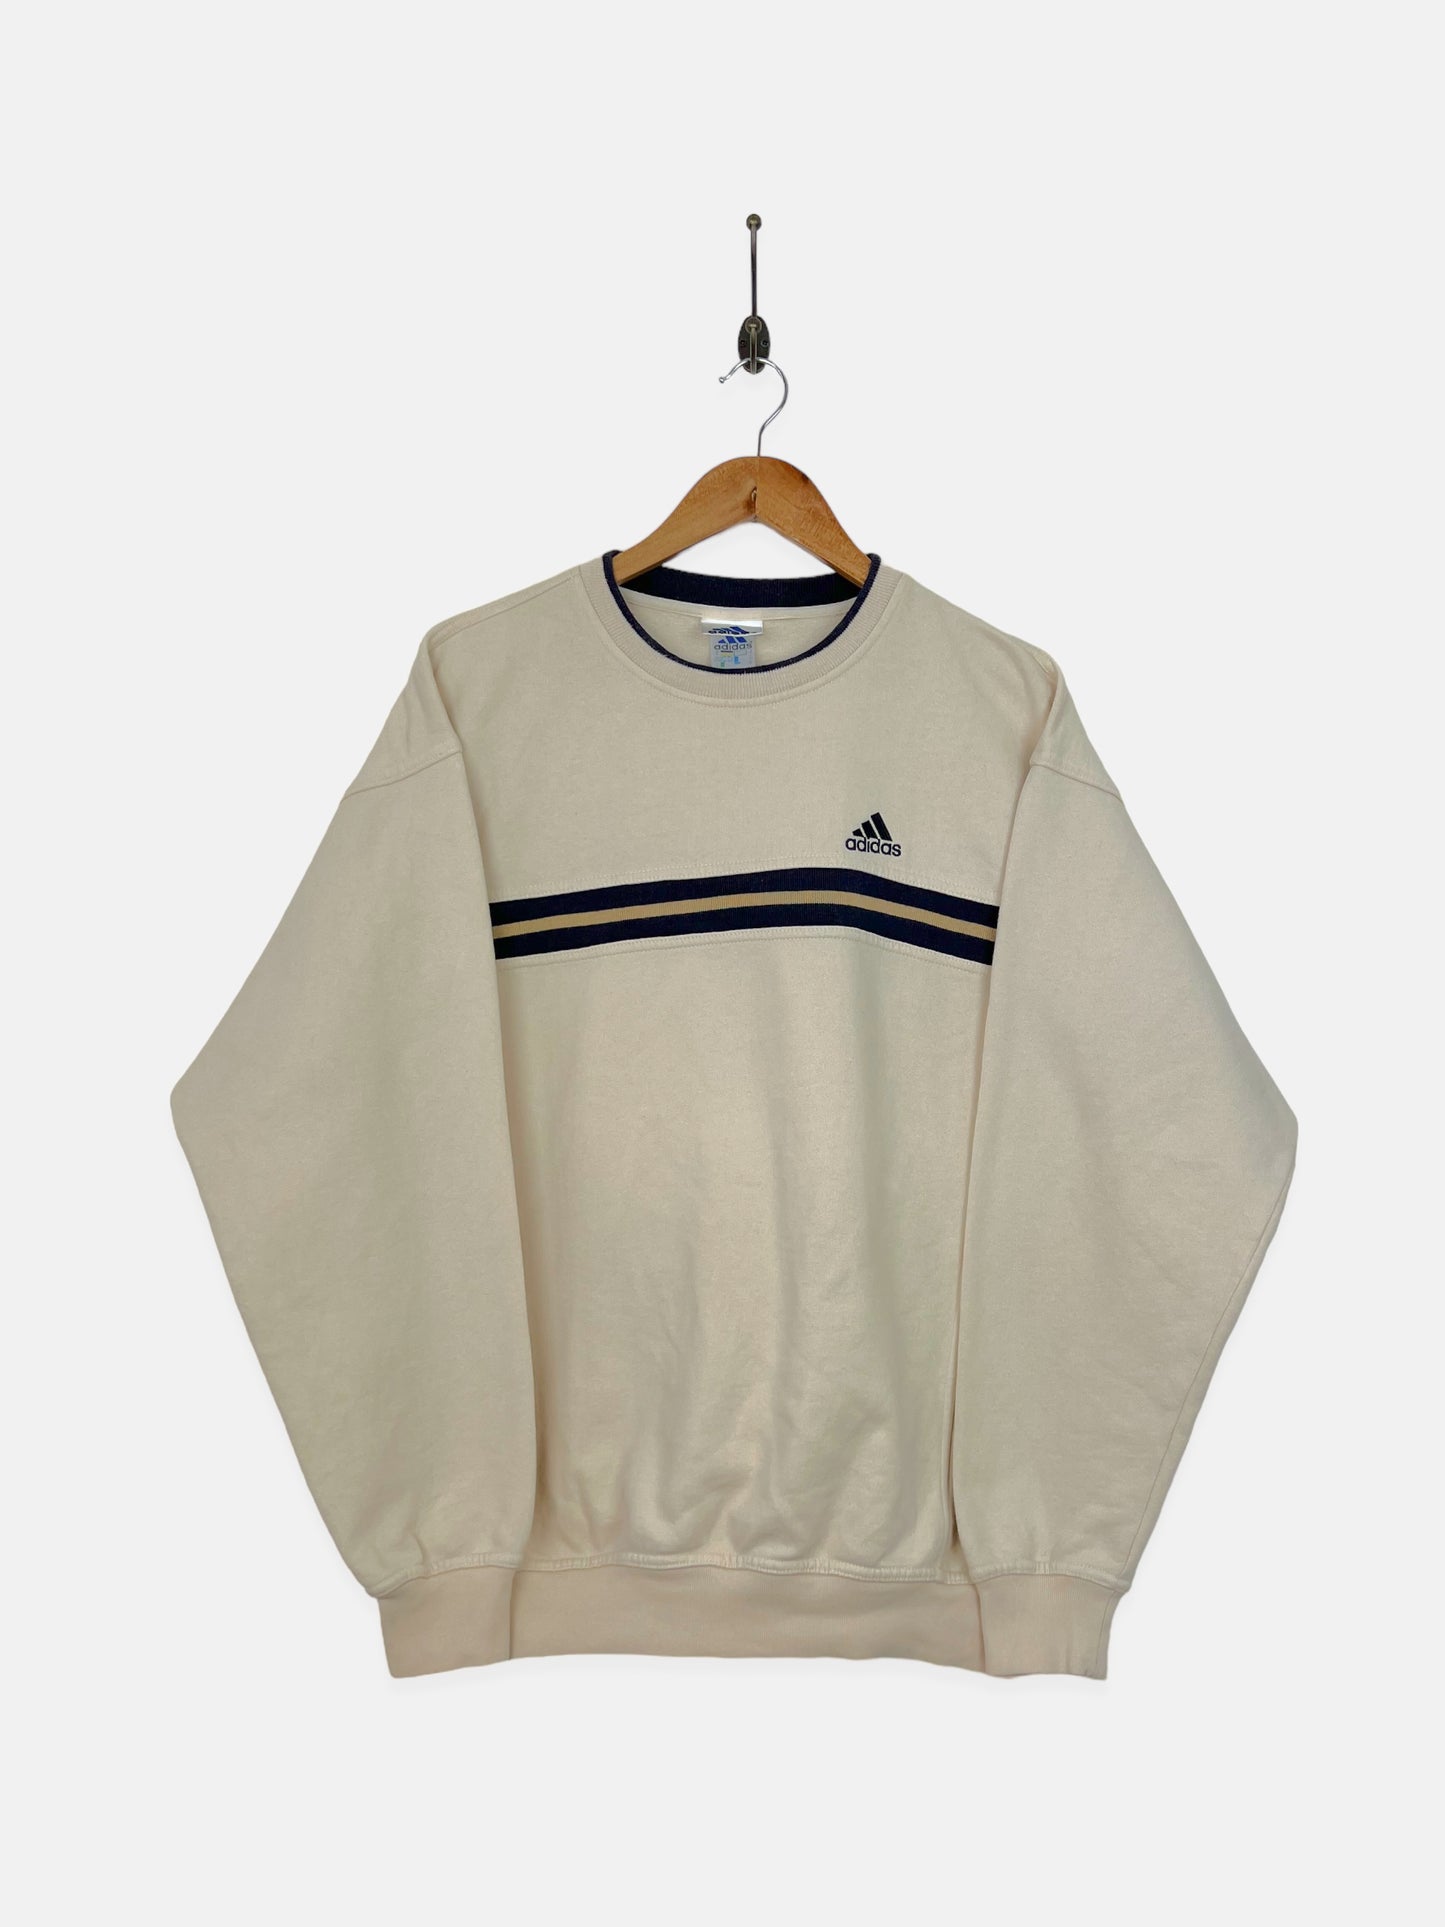 90's Adidas Embroidered Vintage Sweatshirt Size M-L